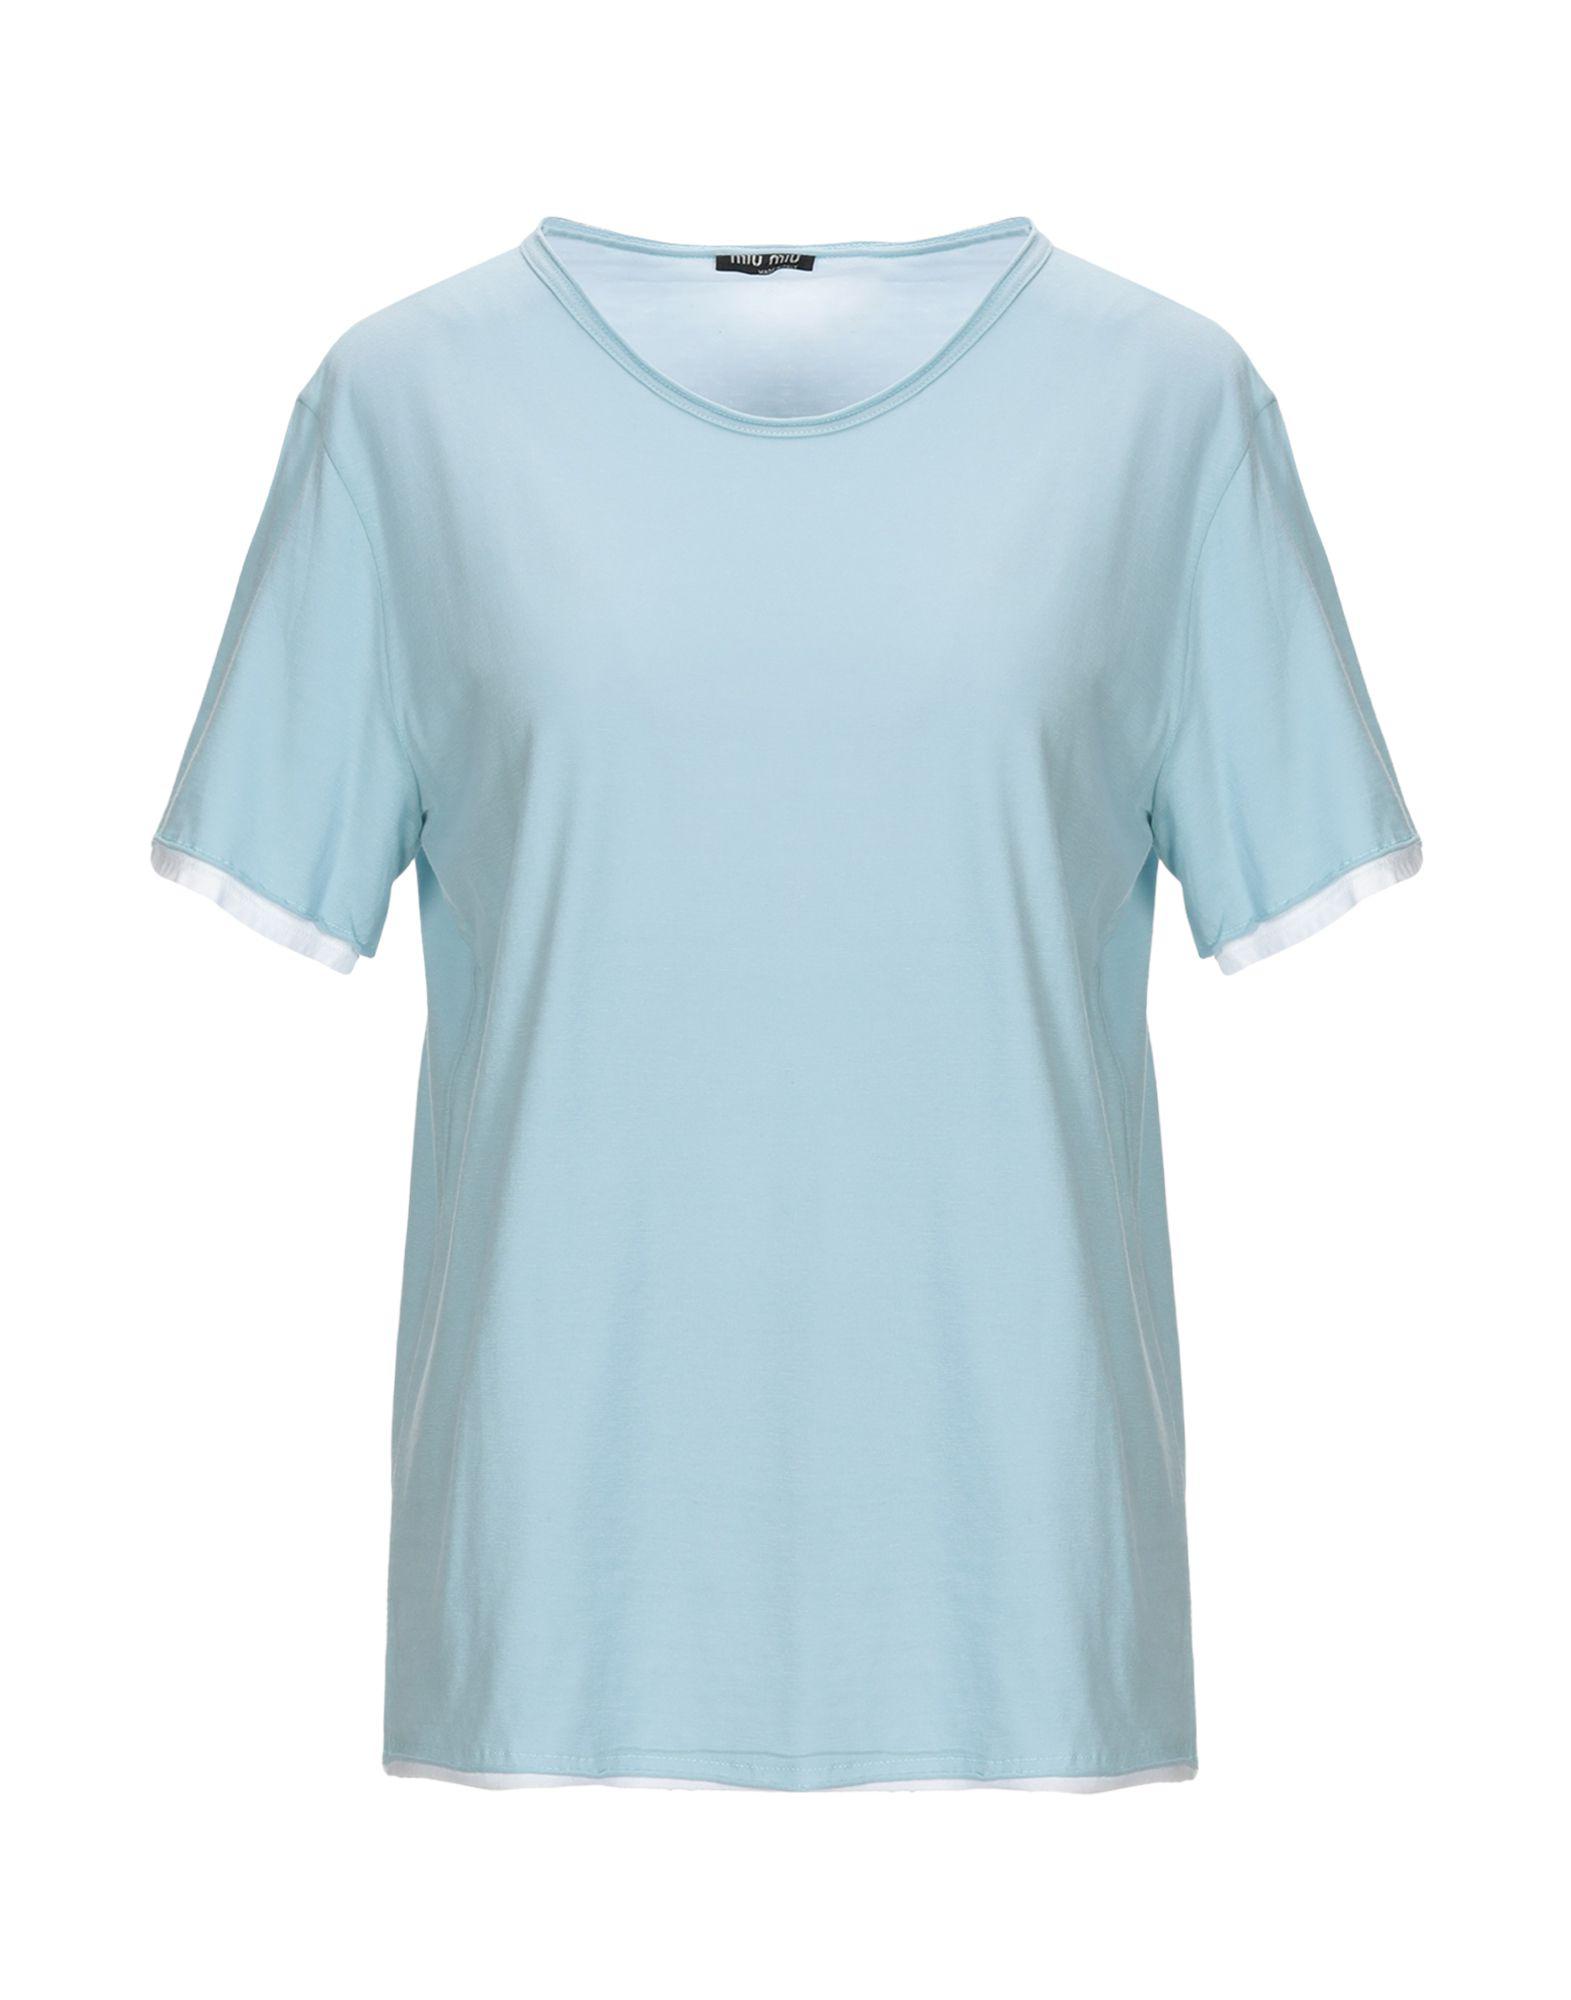 Miu Miu T-shirt in Blue - Lyst